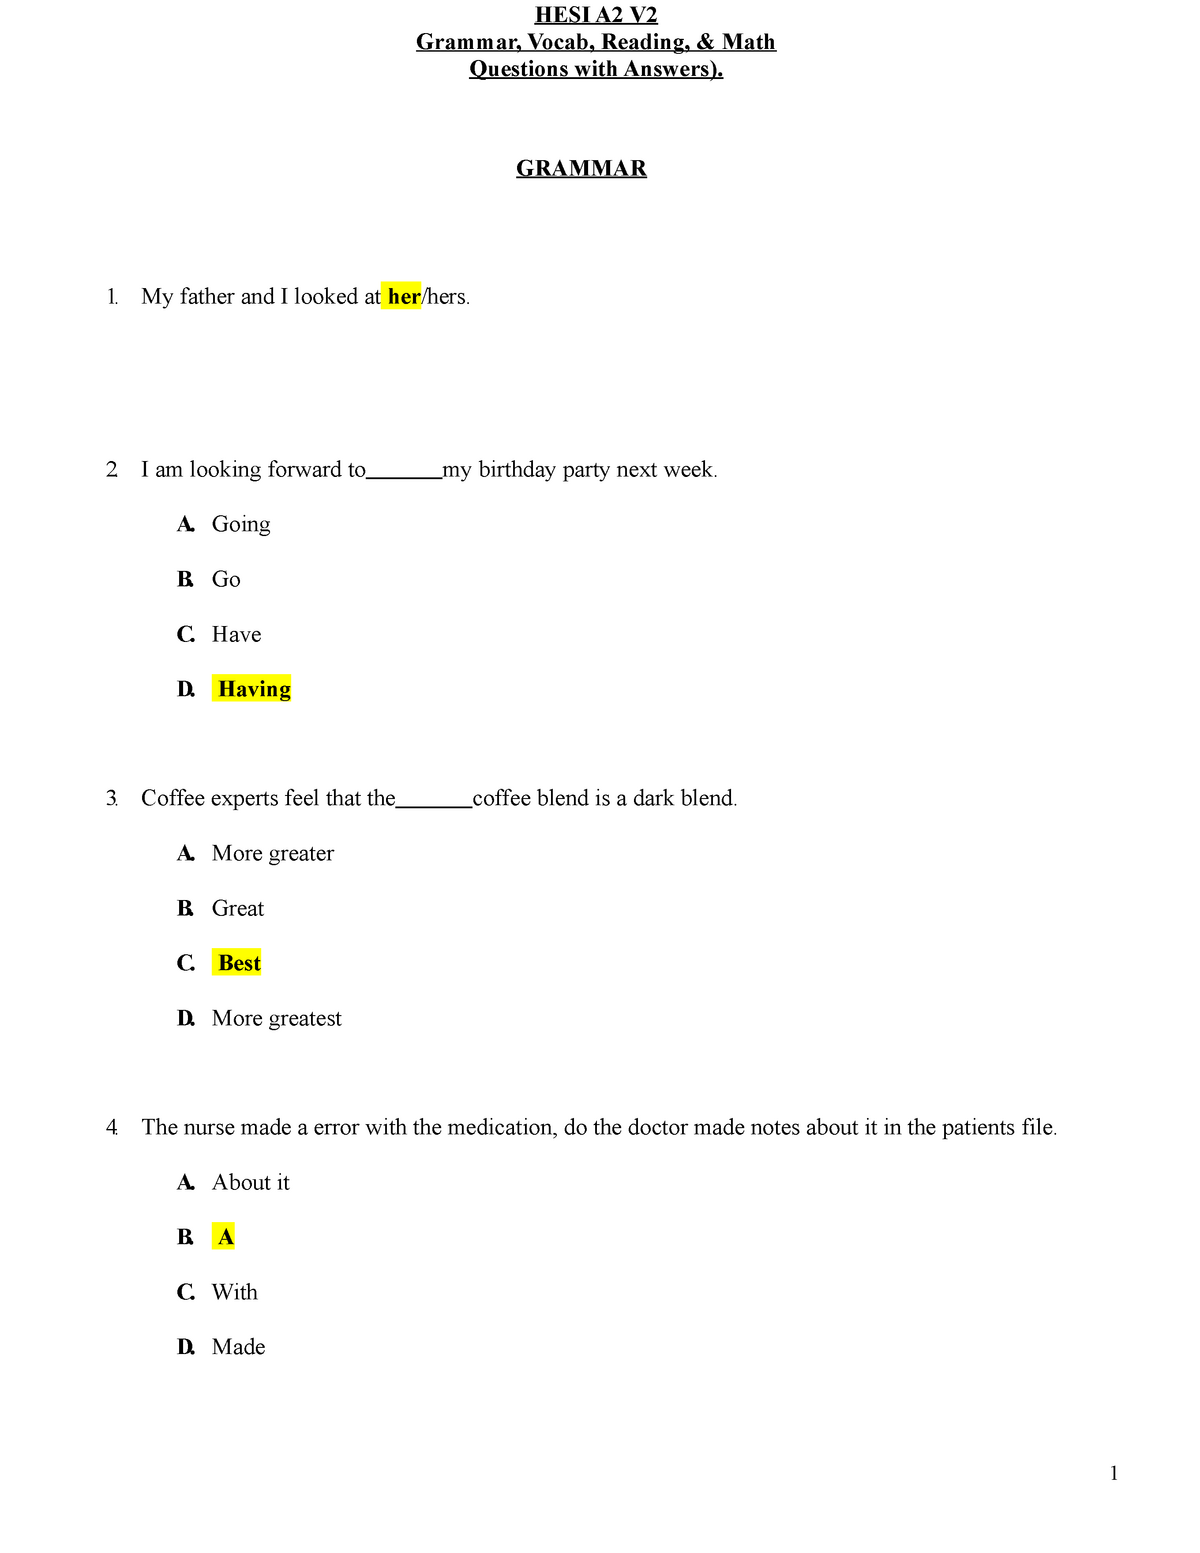 HESI A2 Version 2 Grammar Vocab Reading Math Study Guide pdf 1 Grammar Vocab Reading Math